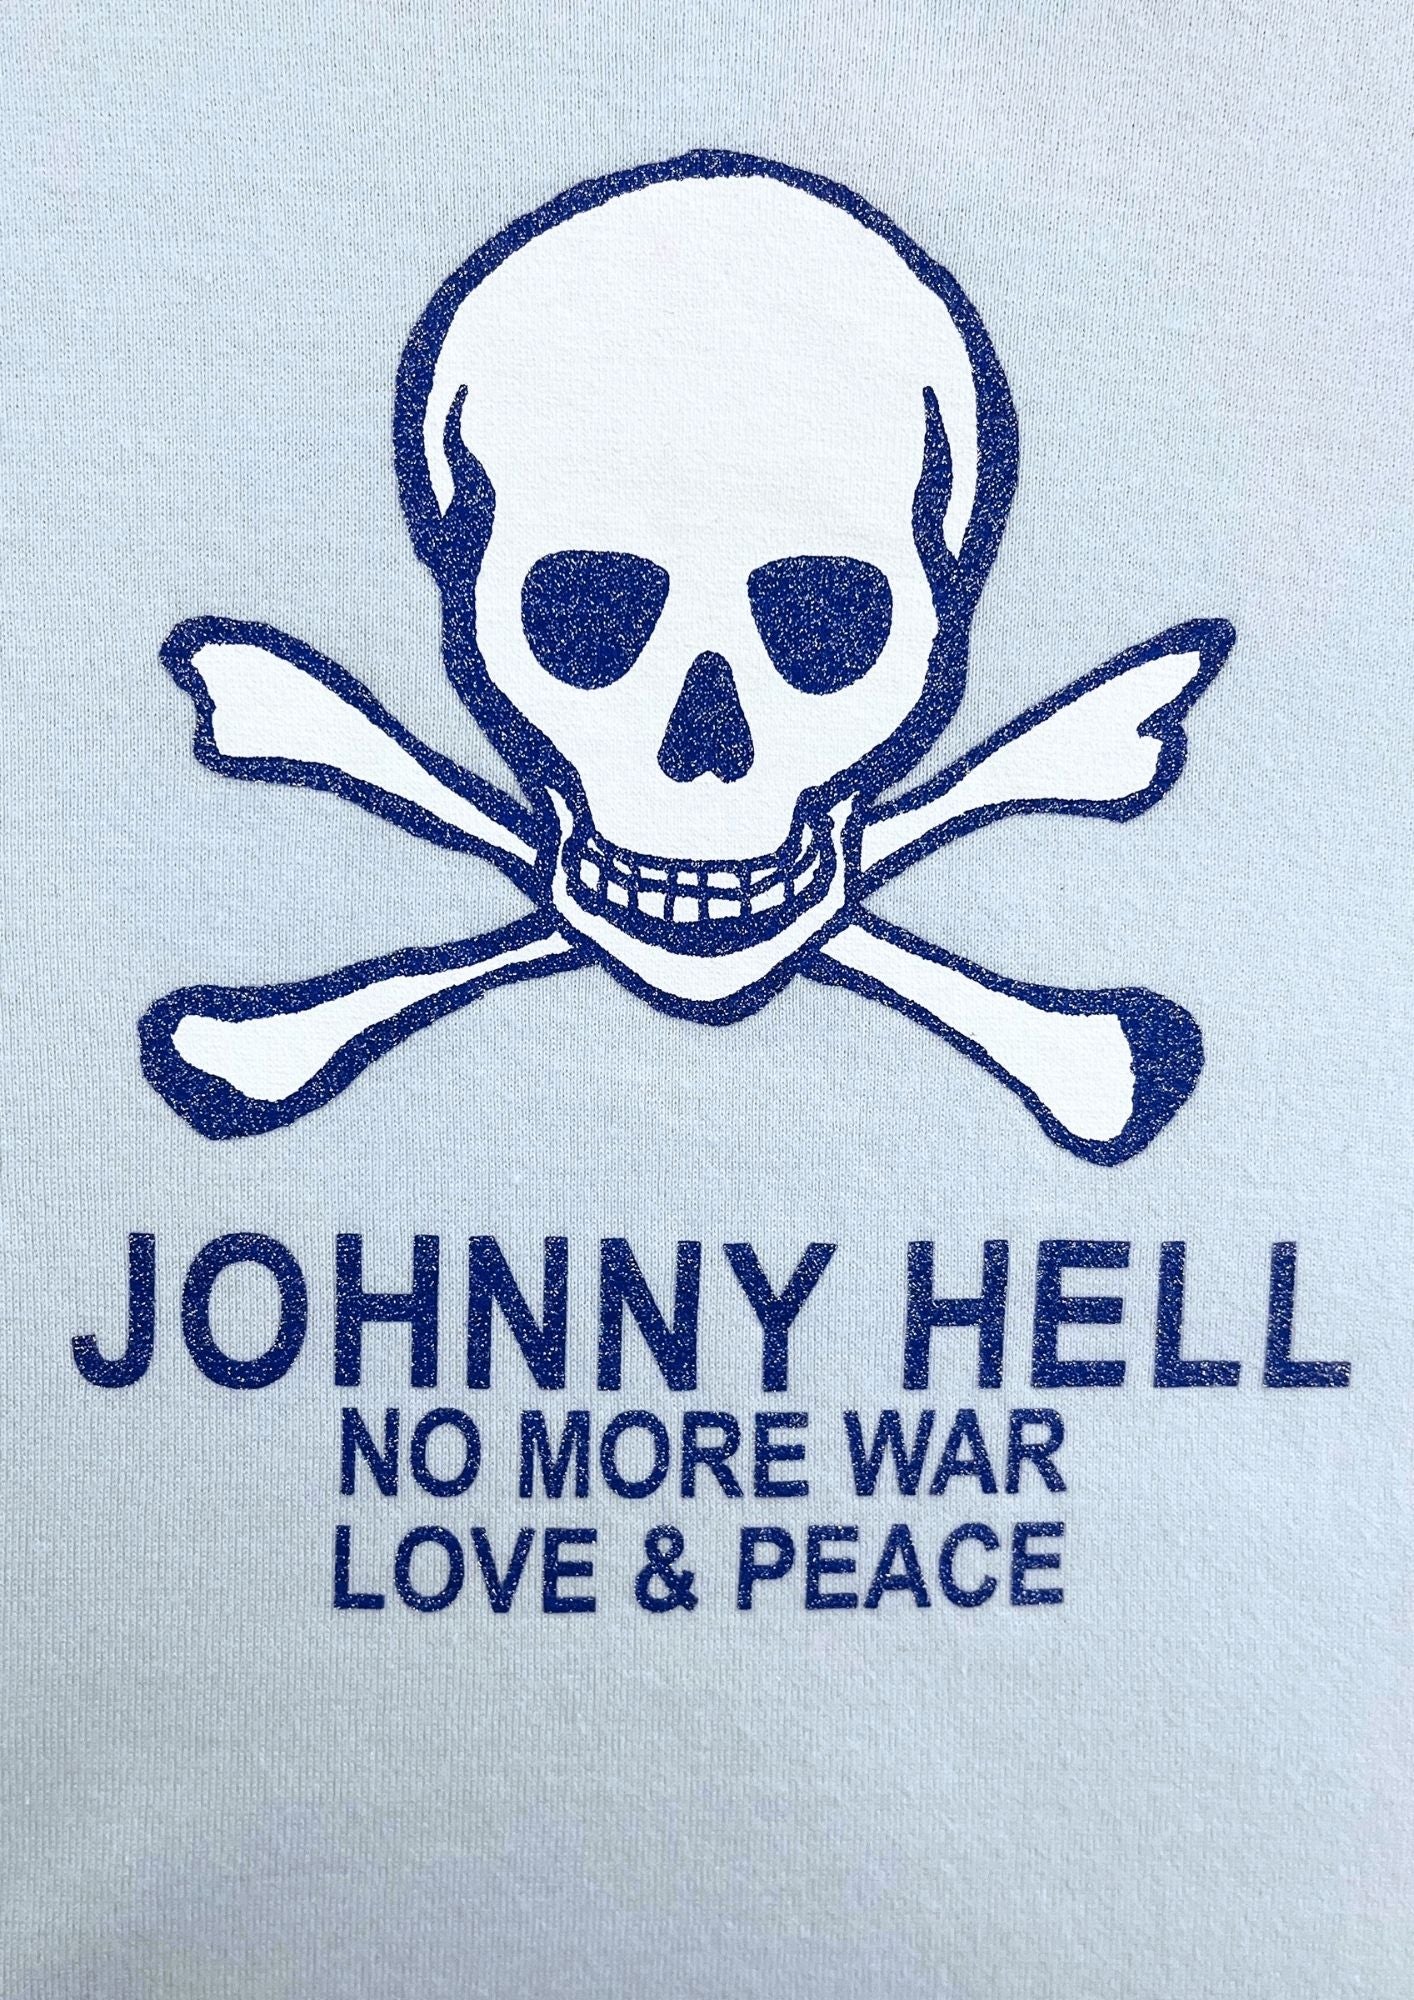 2008 KENICHI ASAI 'No More War Love & Peace' Japanese Band T-shirt